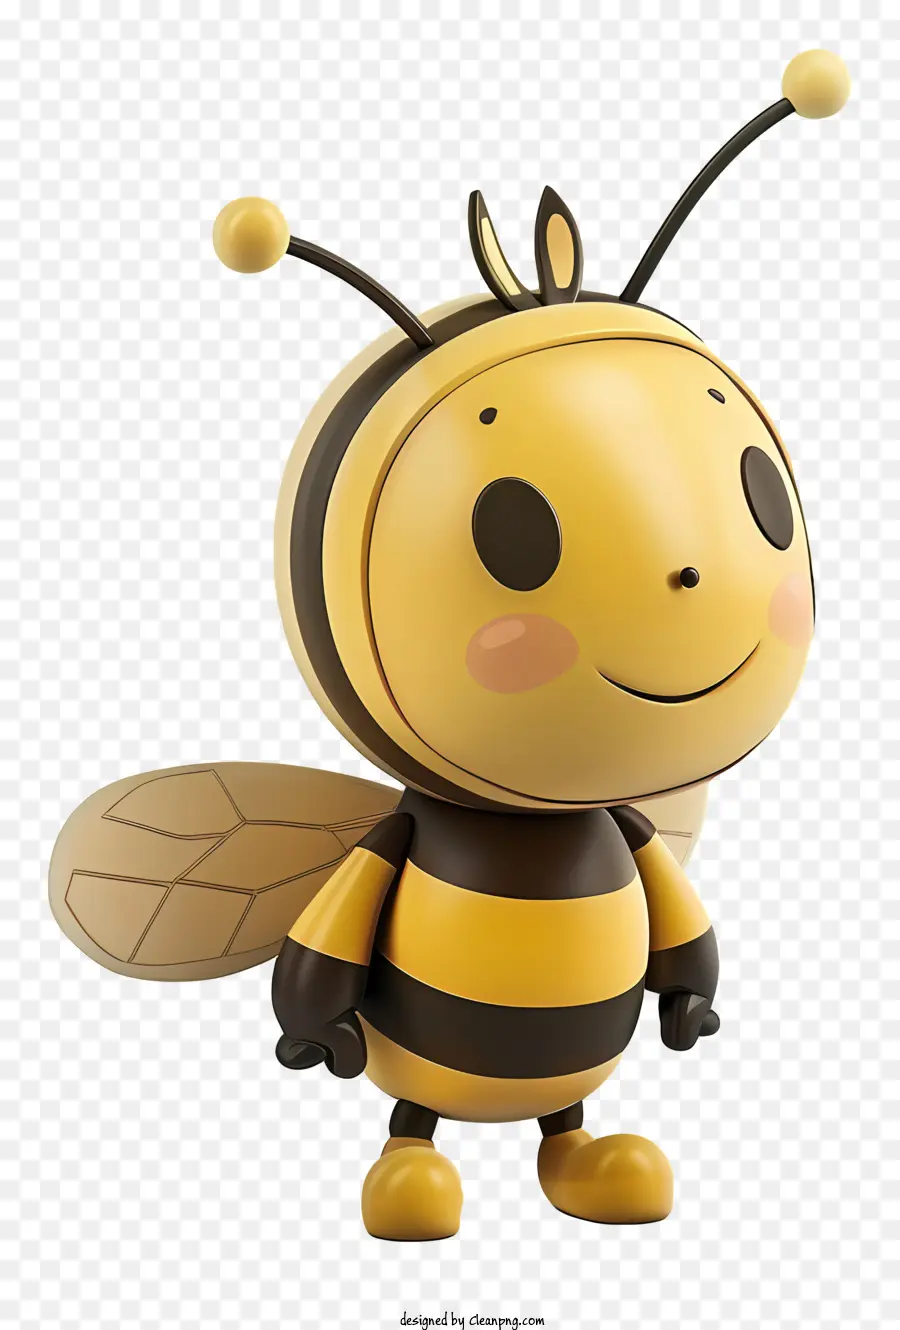 Maya the Bee Bumblebee Toy Plastic Figurine Figurine Bee Funny Toy - Figurina di bomba di plastica con corpo arancione